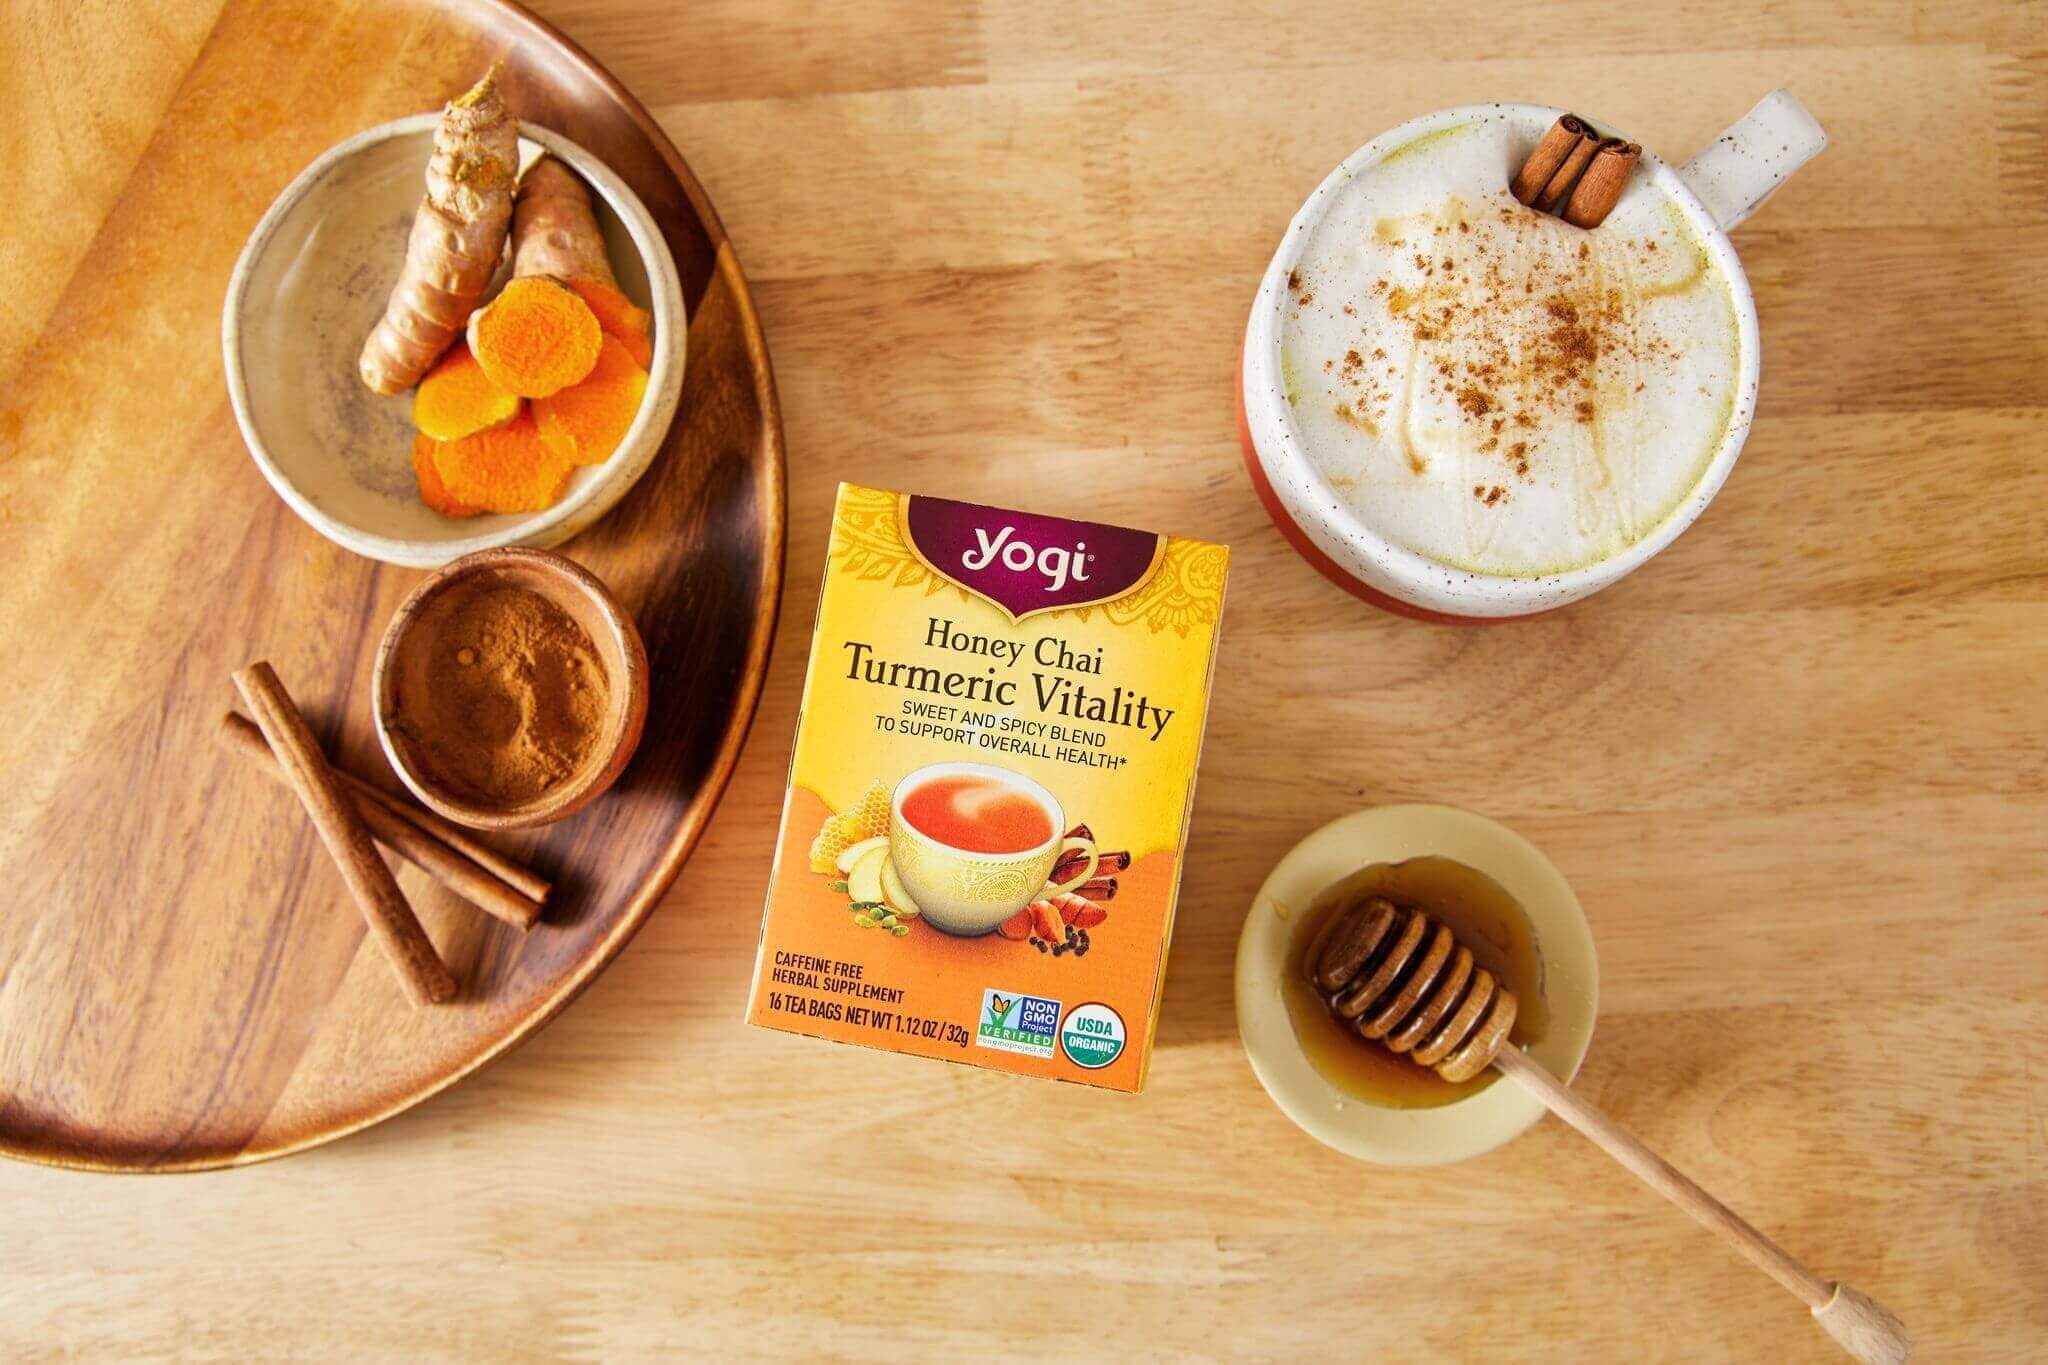 A mug of Honey Golden Milk Latte sits on a counter next to a carton of Yogi Honey Chai Turmeric Vitality Tea